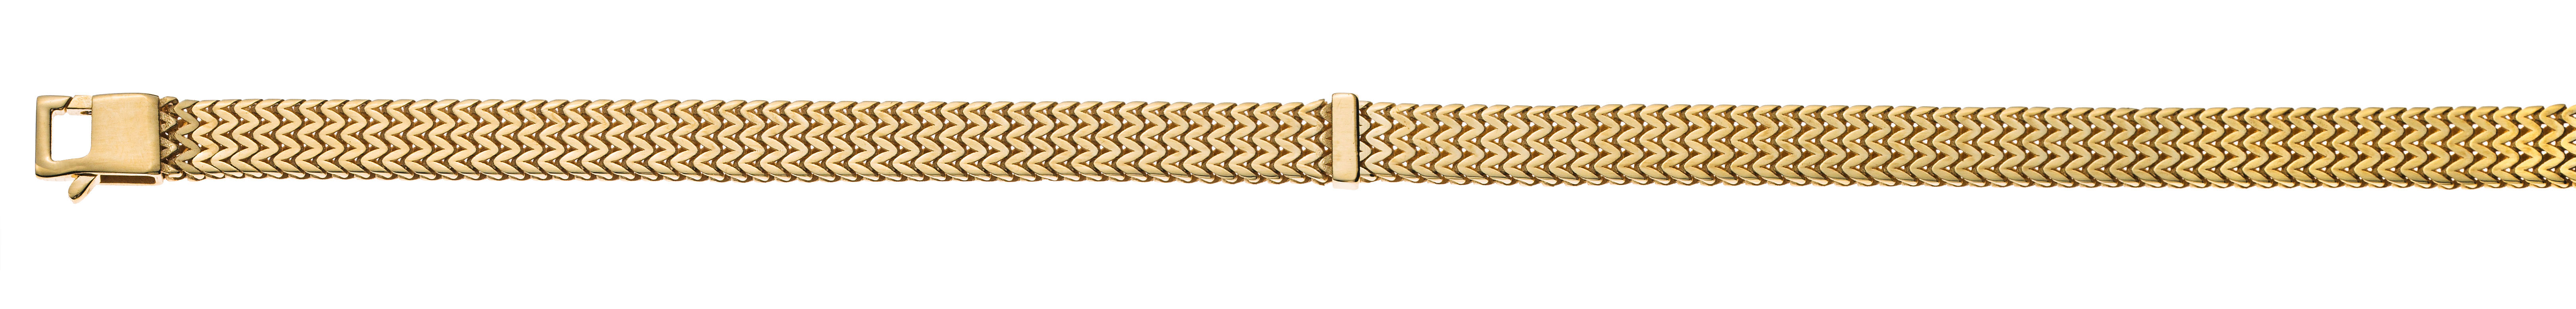 AURONOS Prestige Armband Milanaise 18K Gelbgold 19cm